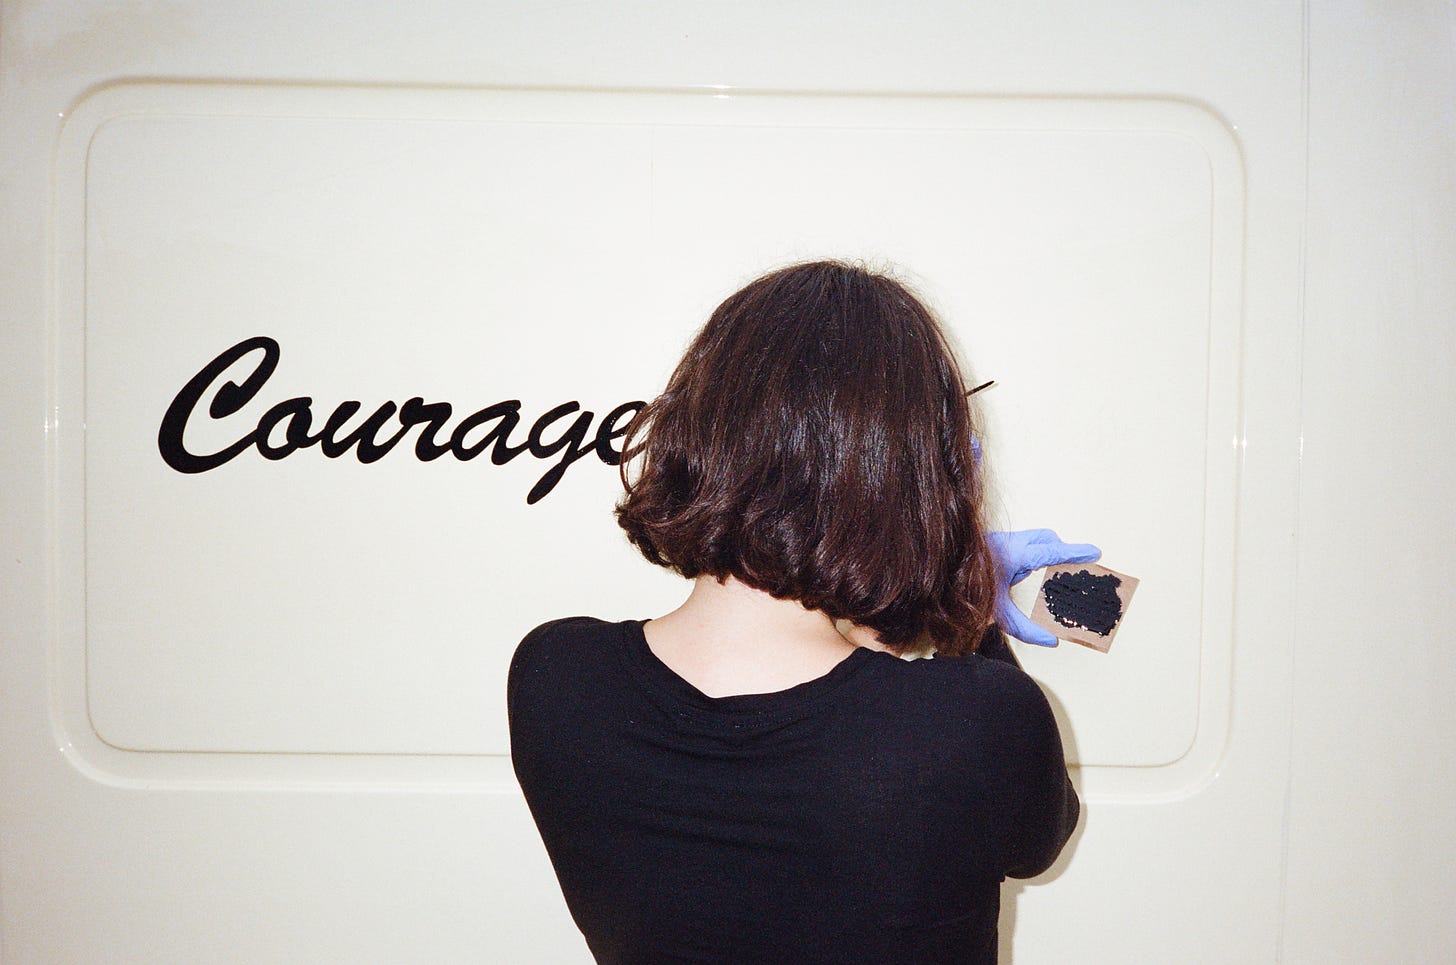 Jenna Homen painting the Courage van